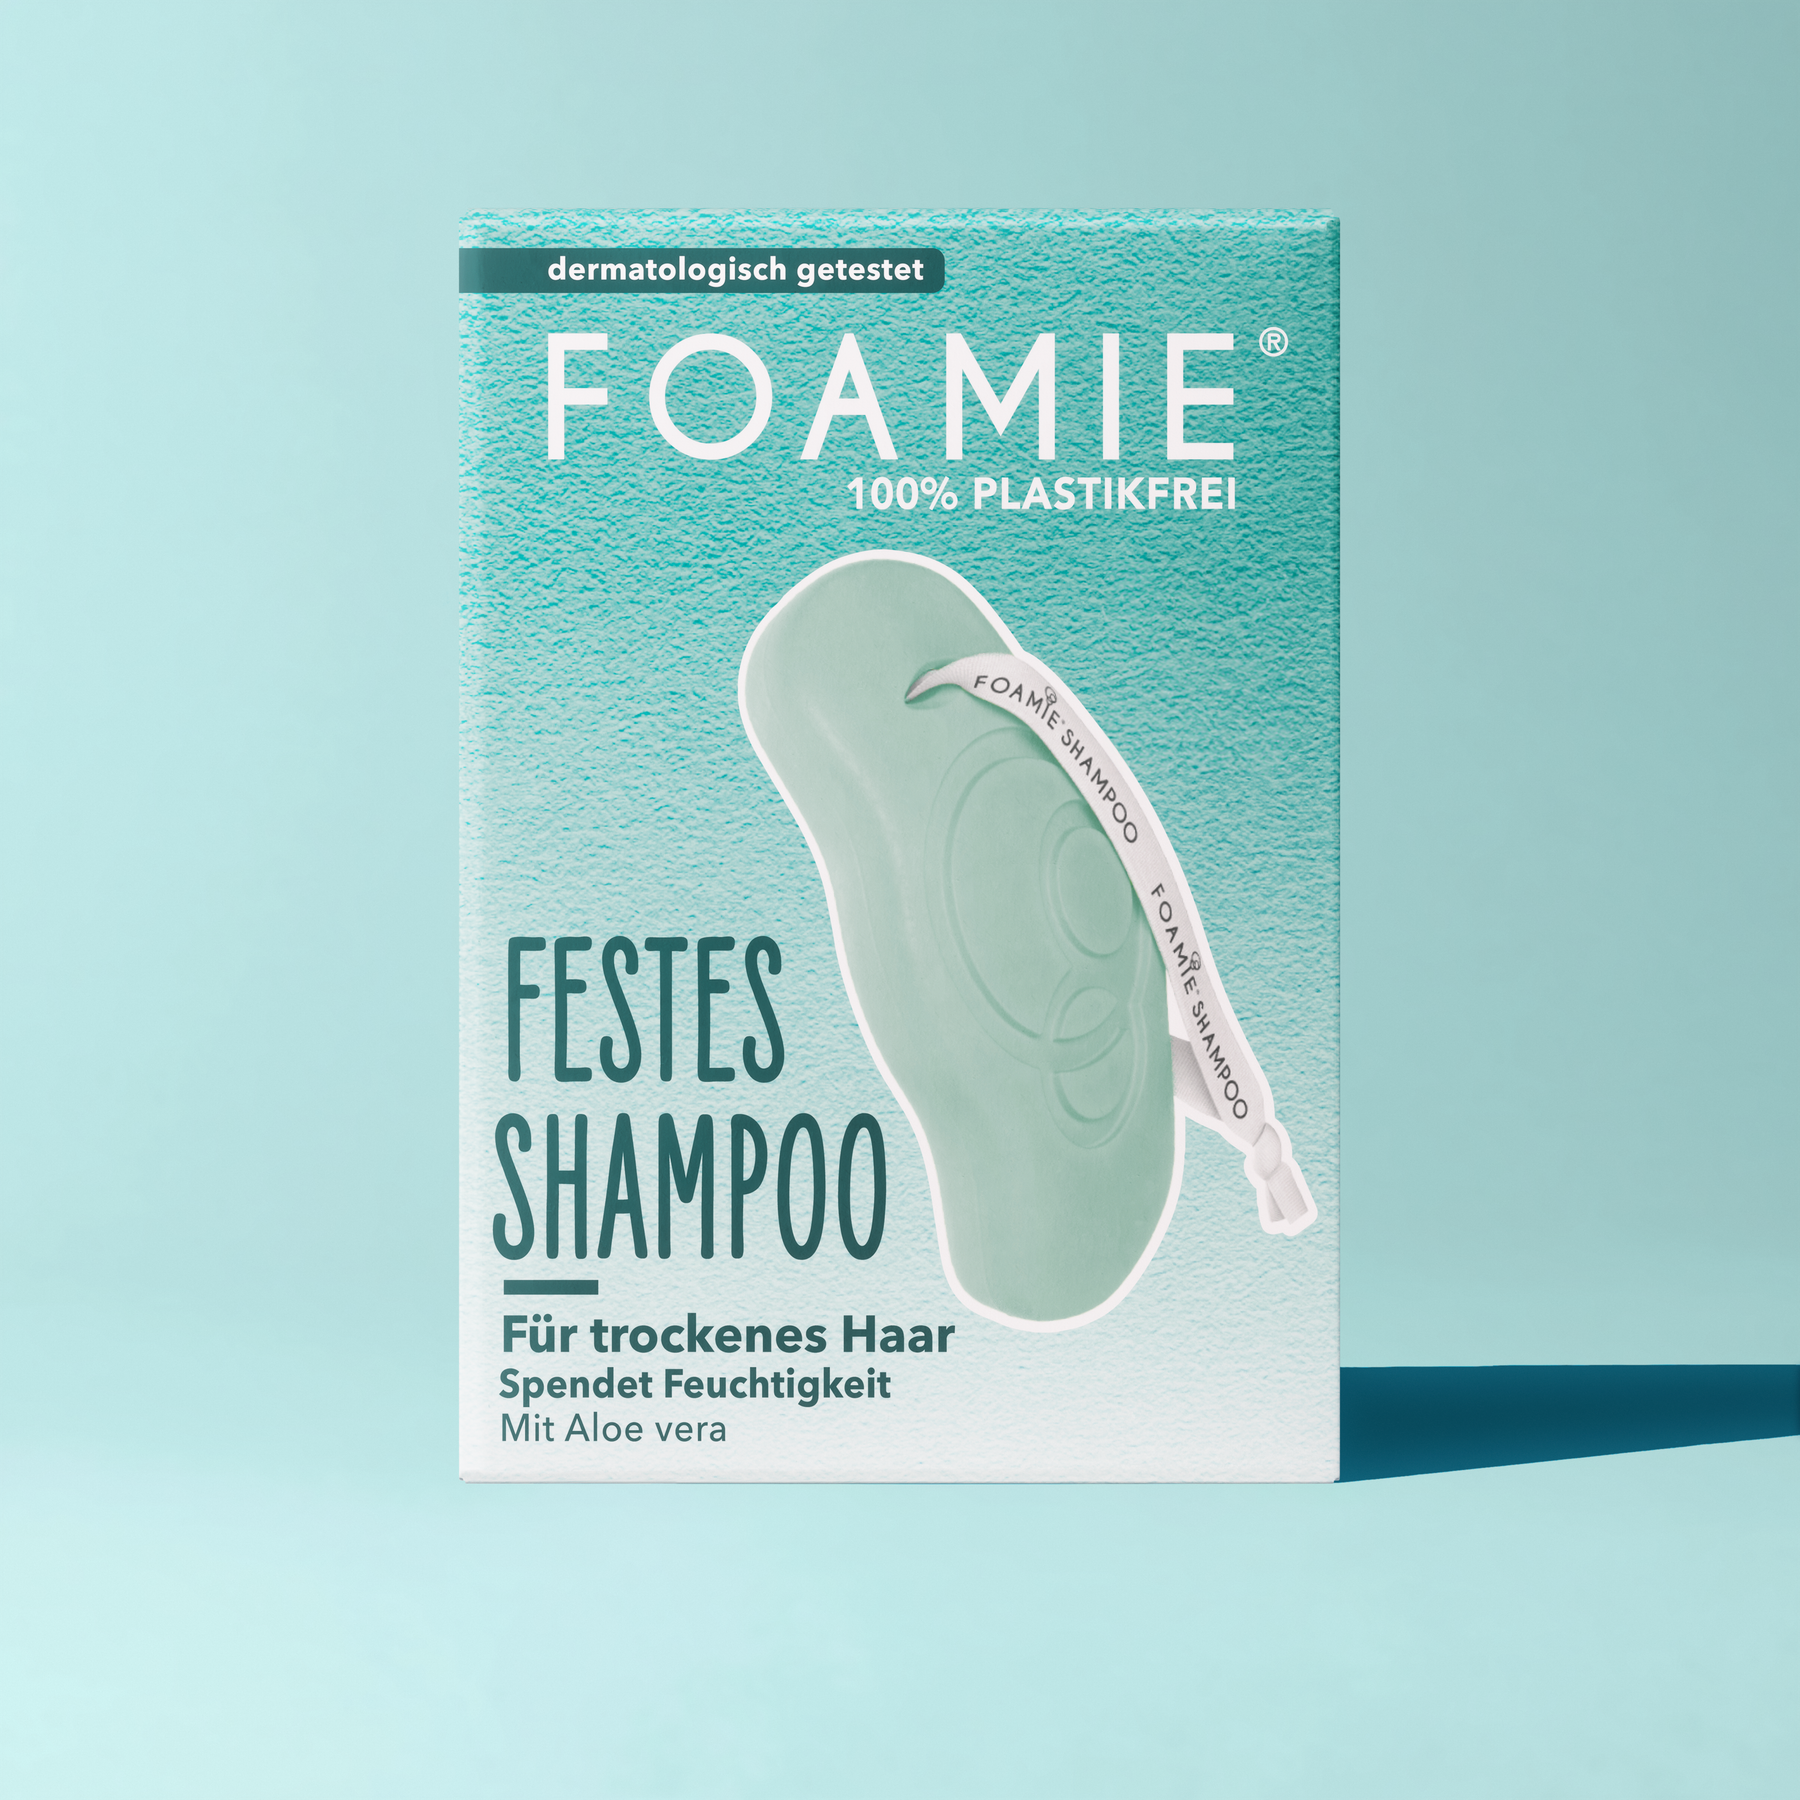 Festes Shampoo für trockenes Haar | Offizieller Foamie Online Shop – Foamie  – Offizieller Online Shop